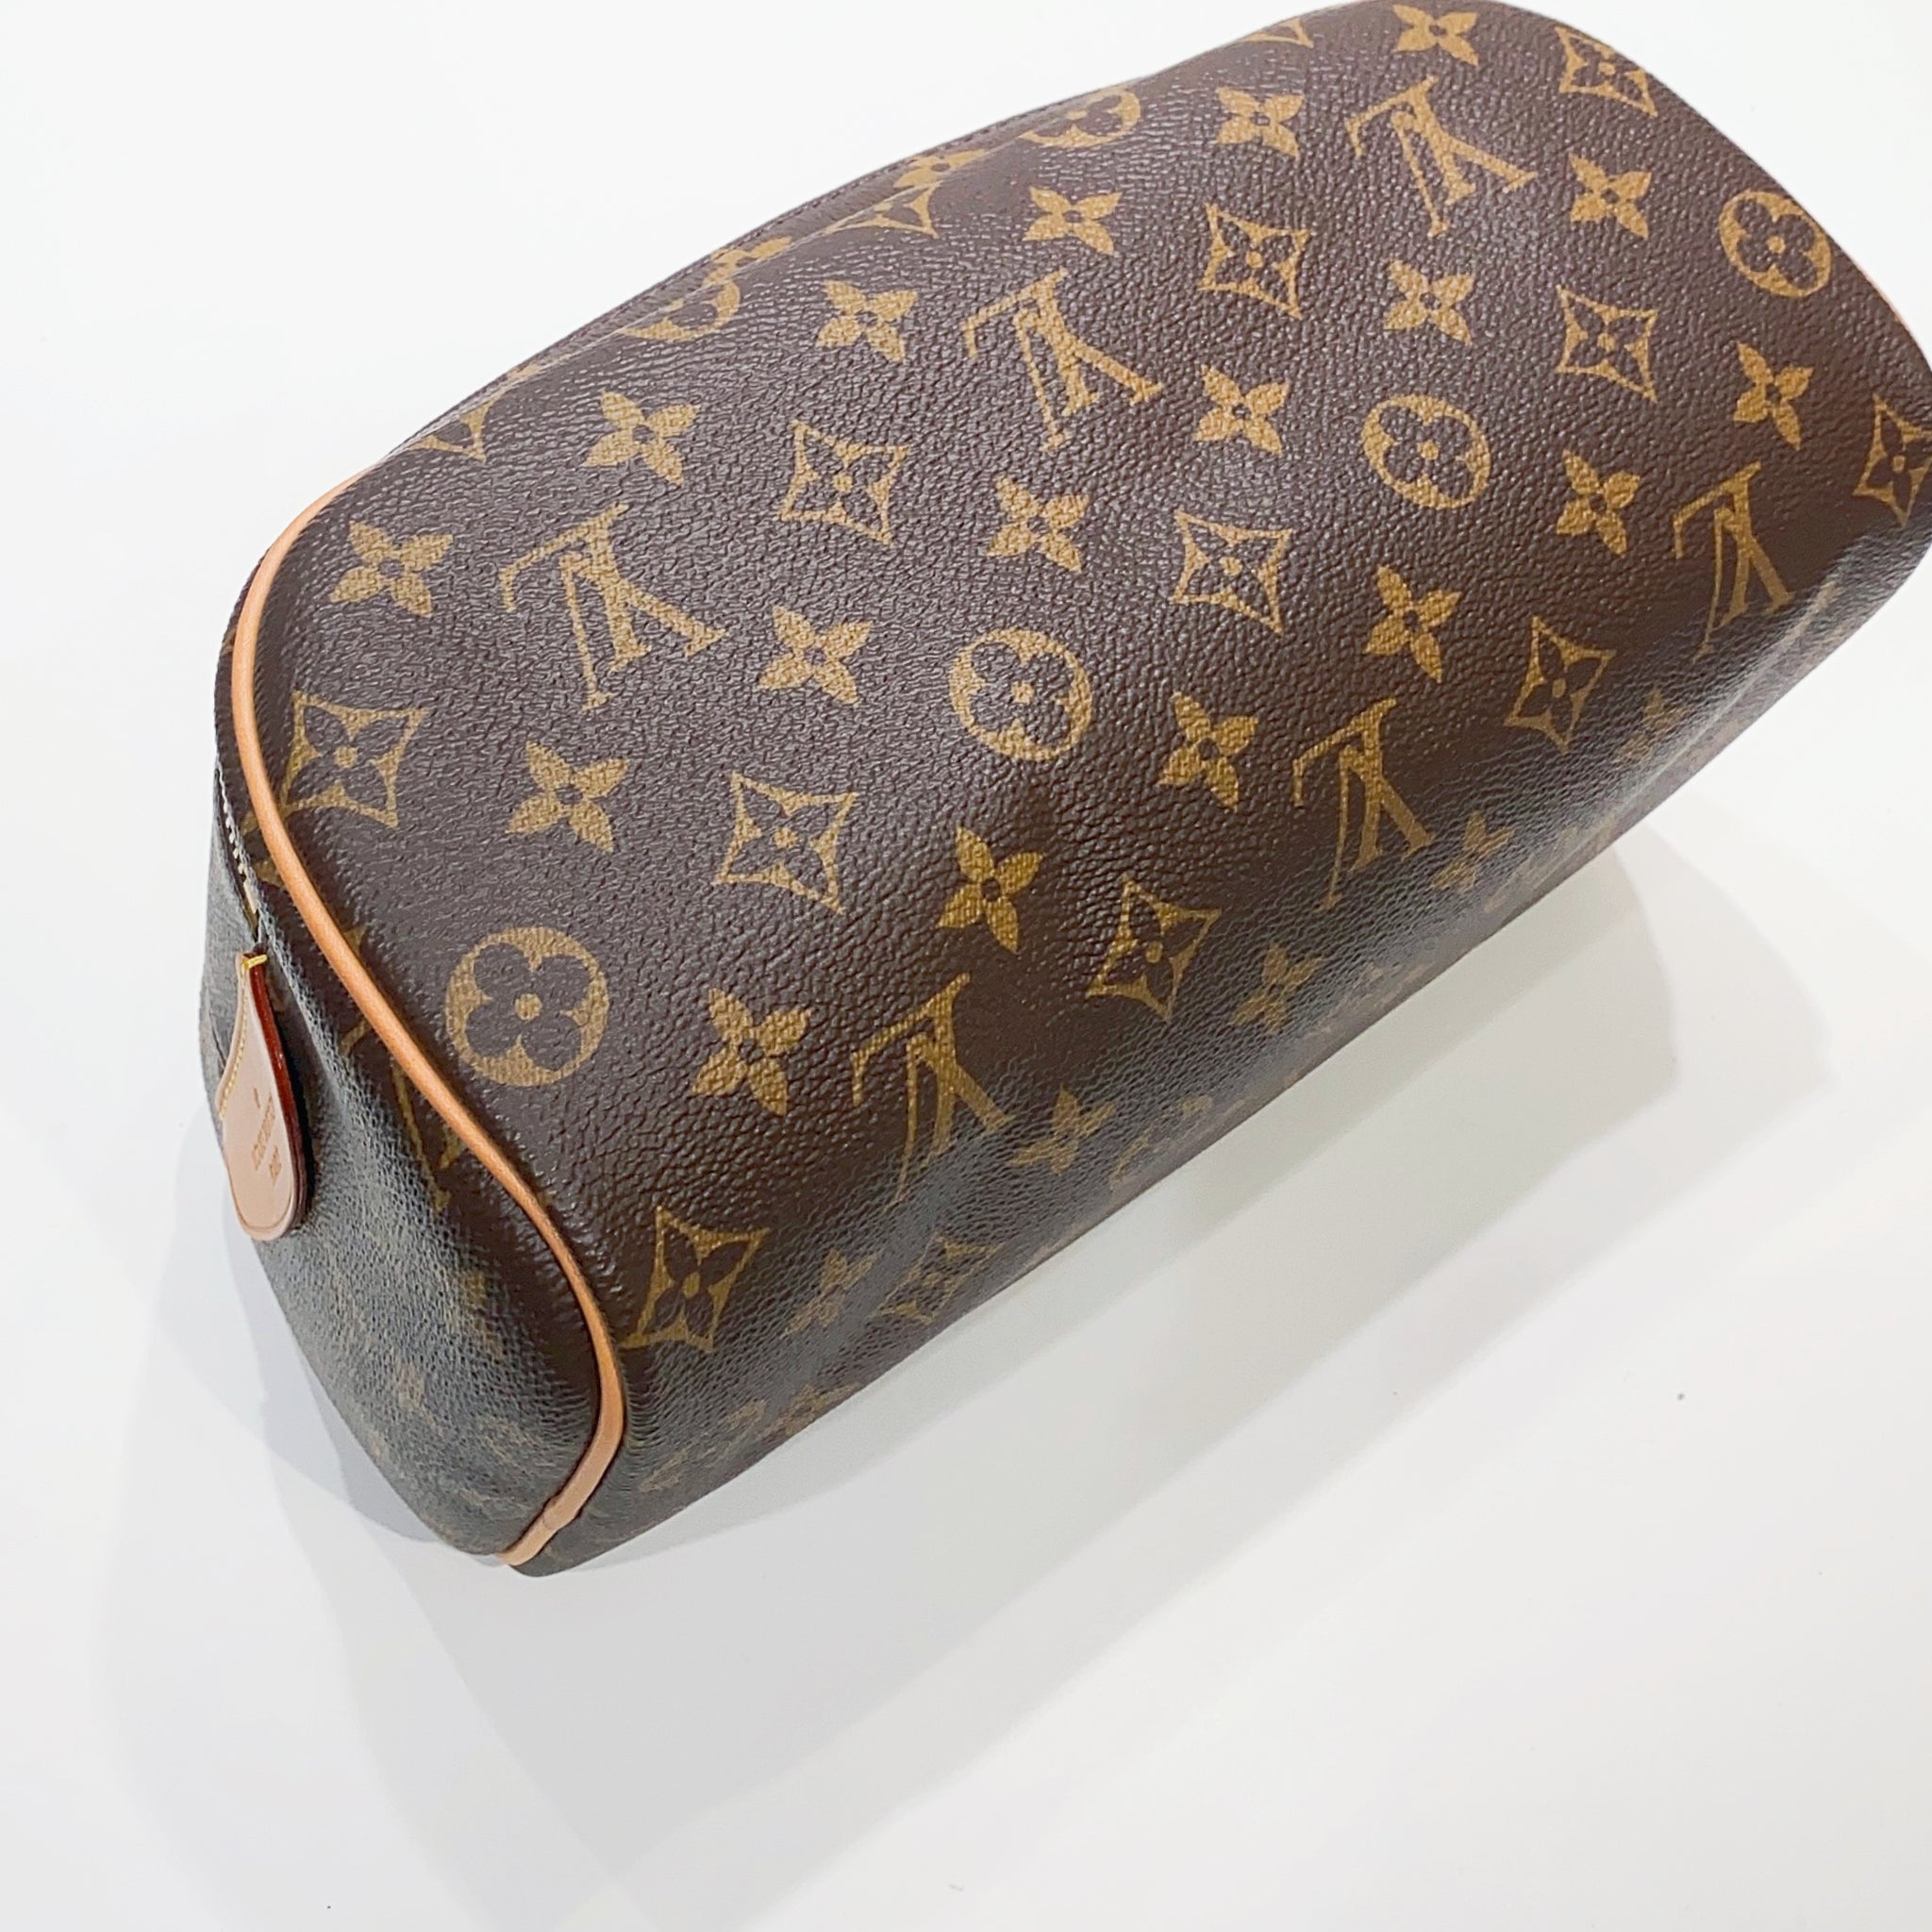 Louis Vuitton Monogram King Size Toiletry Bag - Brown Cosmetic